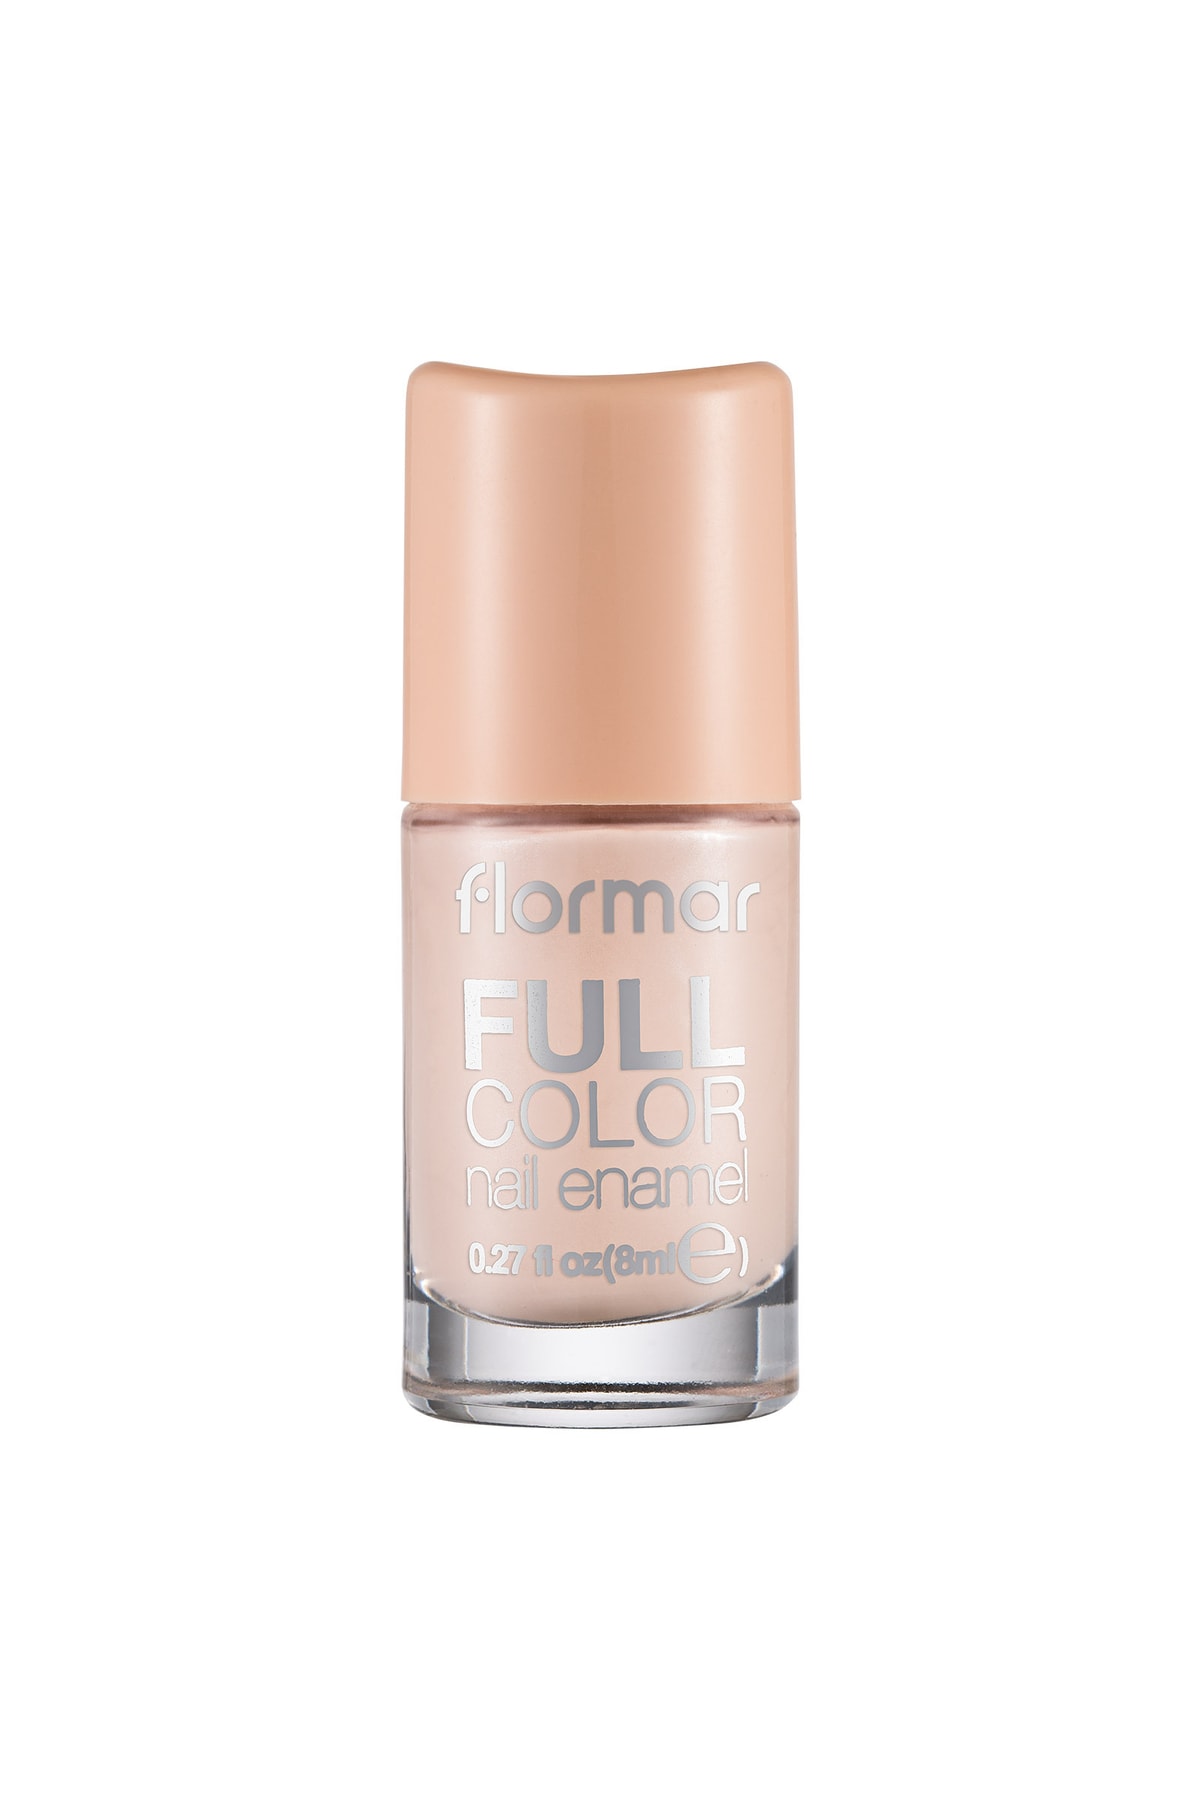 Flormar Full Color Ultra Yüksek Pigmentli & Parlak Bitişli Oje